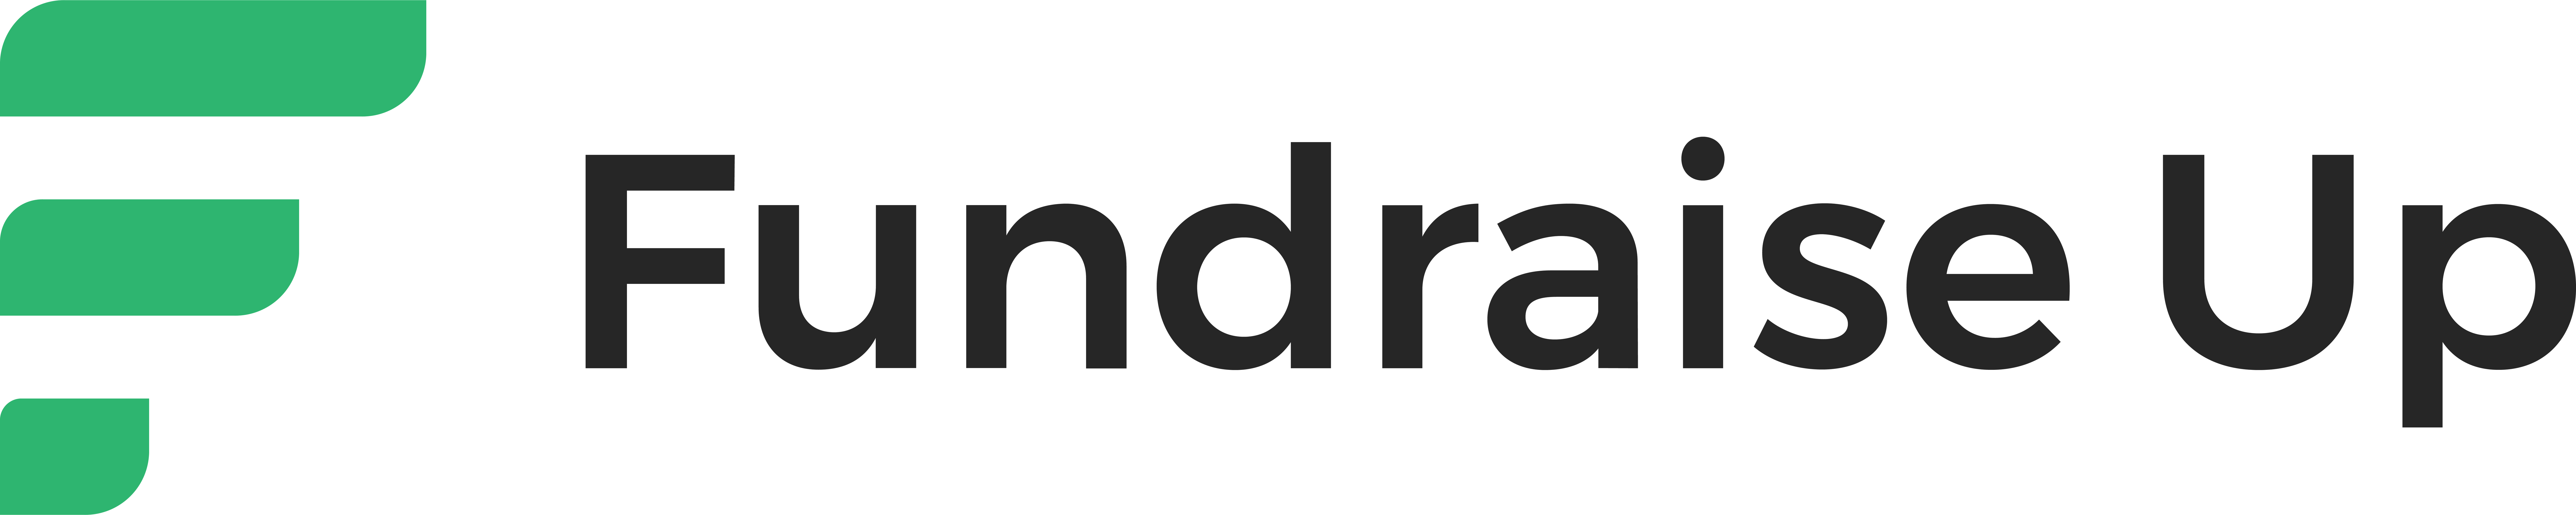 FundraiseUp logo